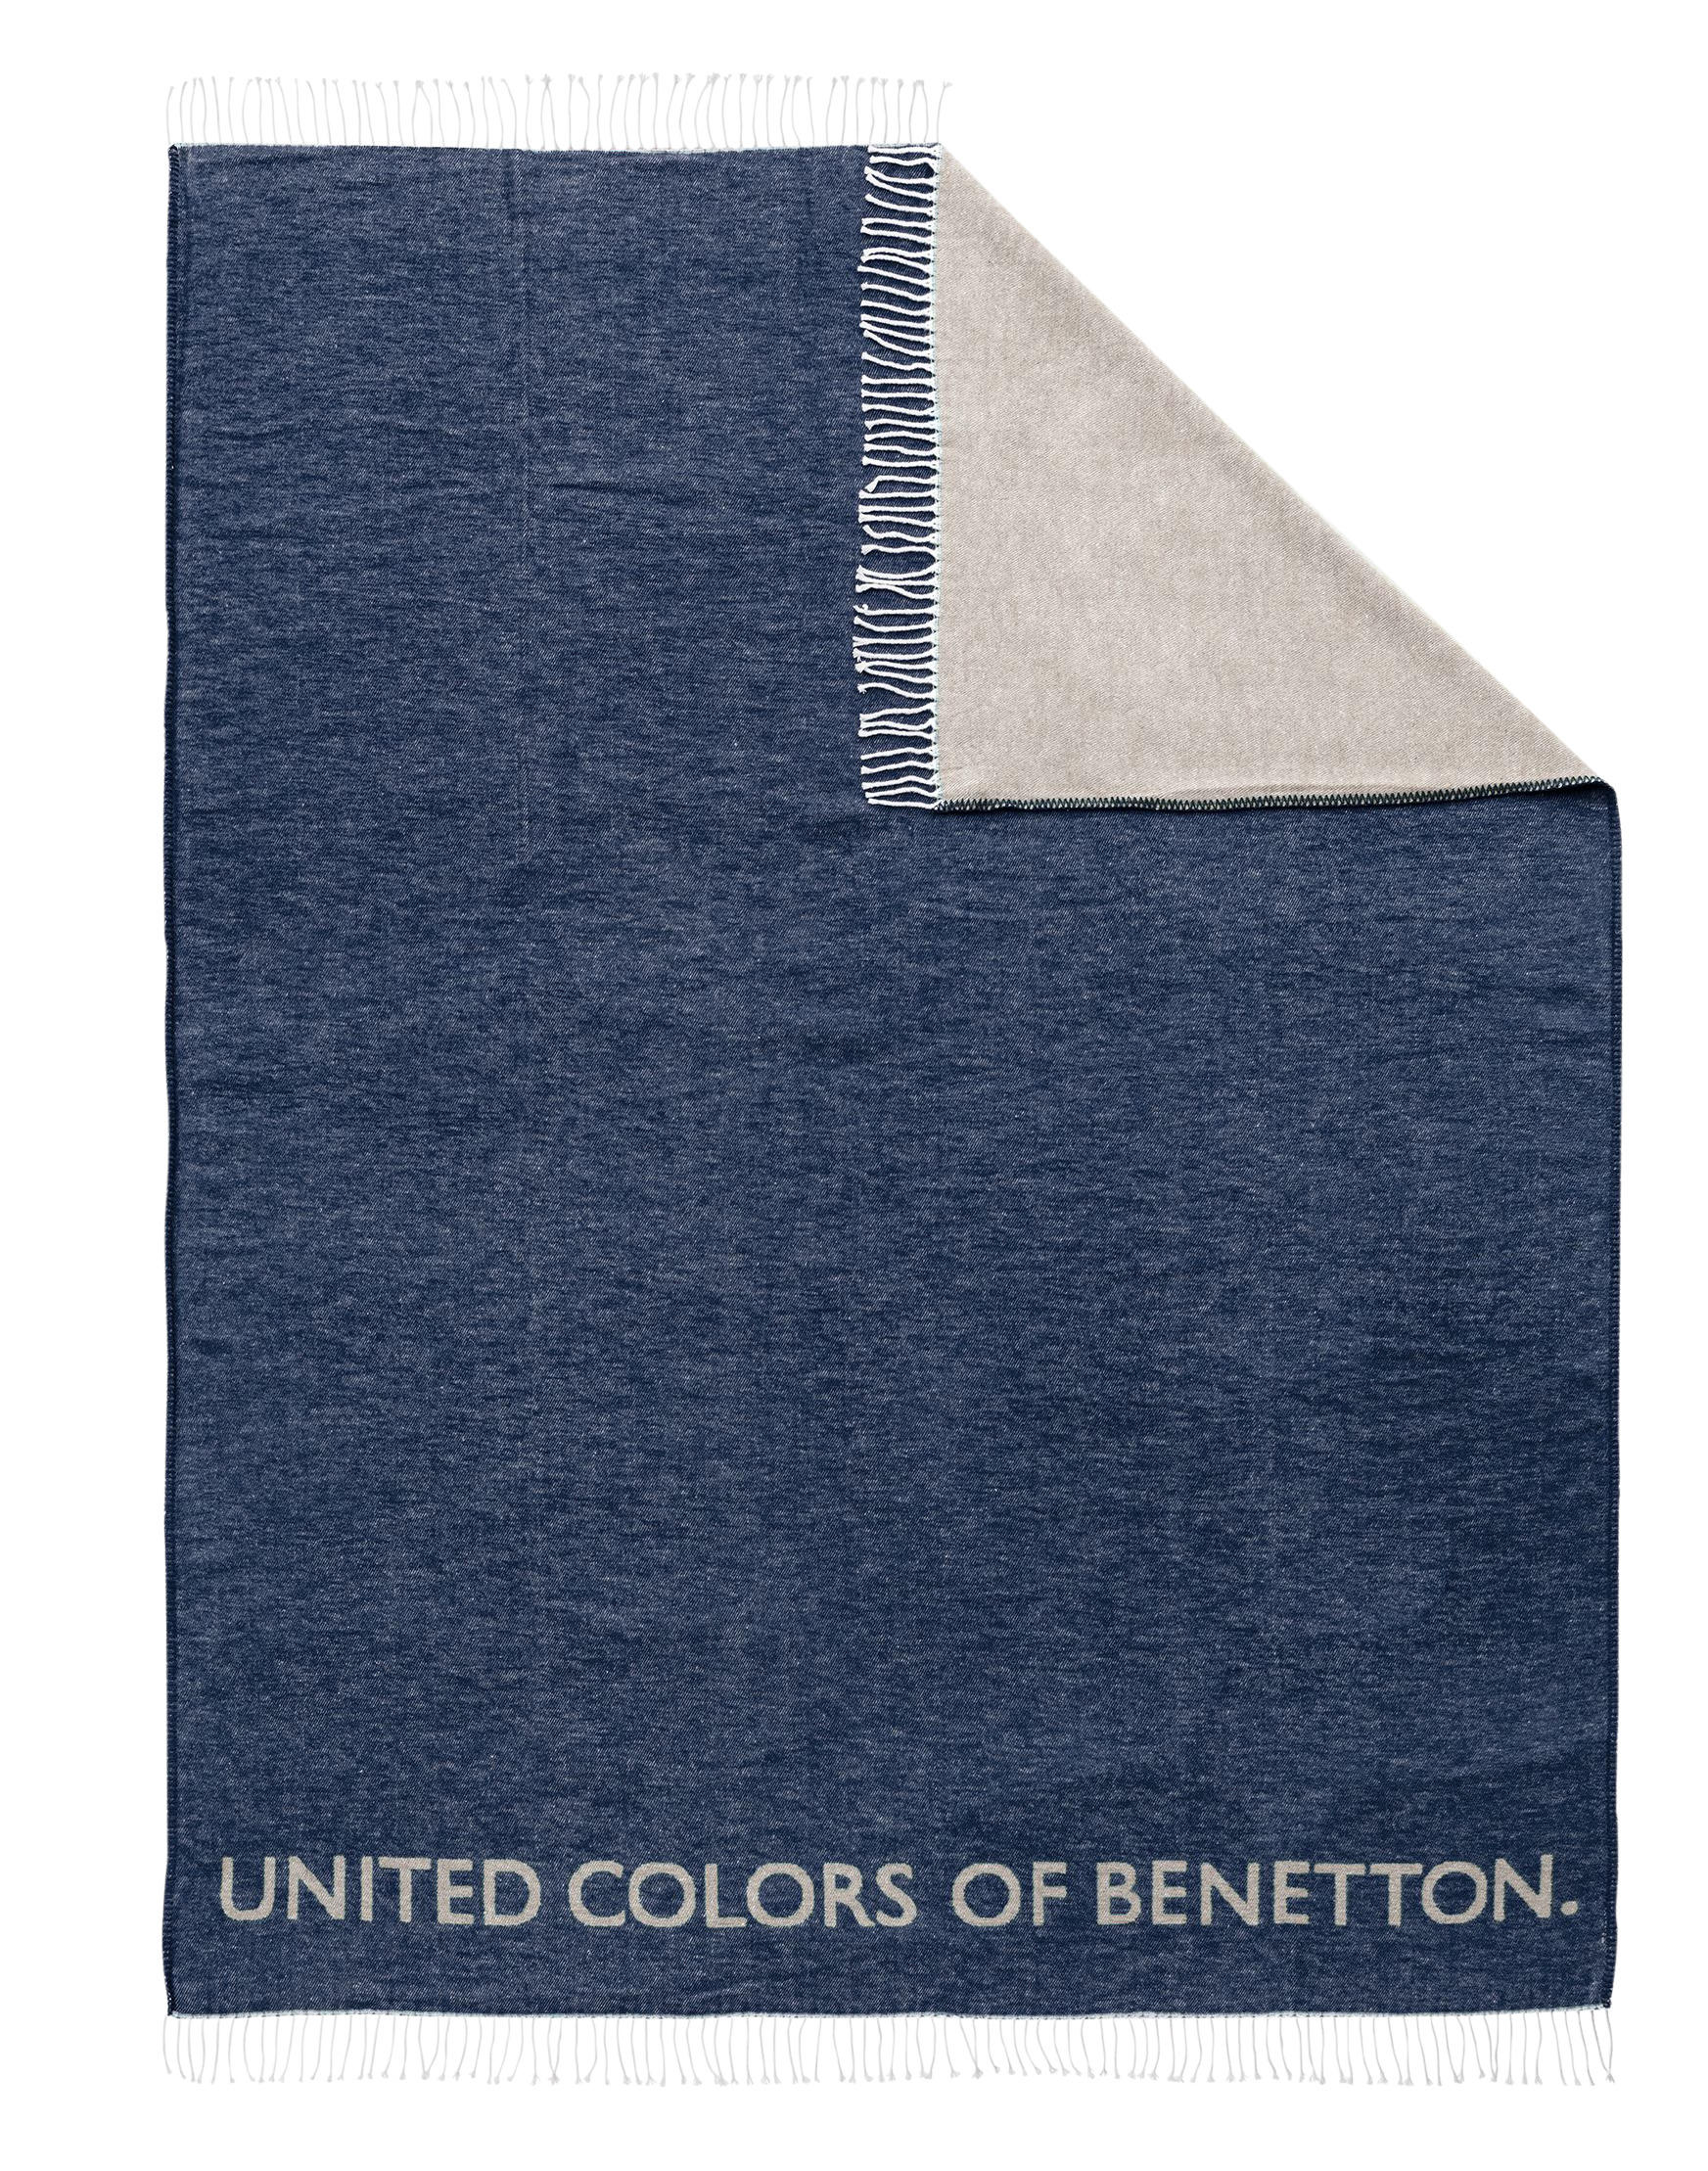 WOHNDECKE BENETTON BE-0135  - Hellgrau/Dunkelblau, Basics, Textil (190/140/2cm) - Benetton